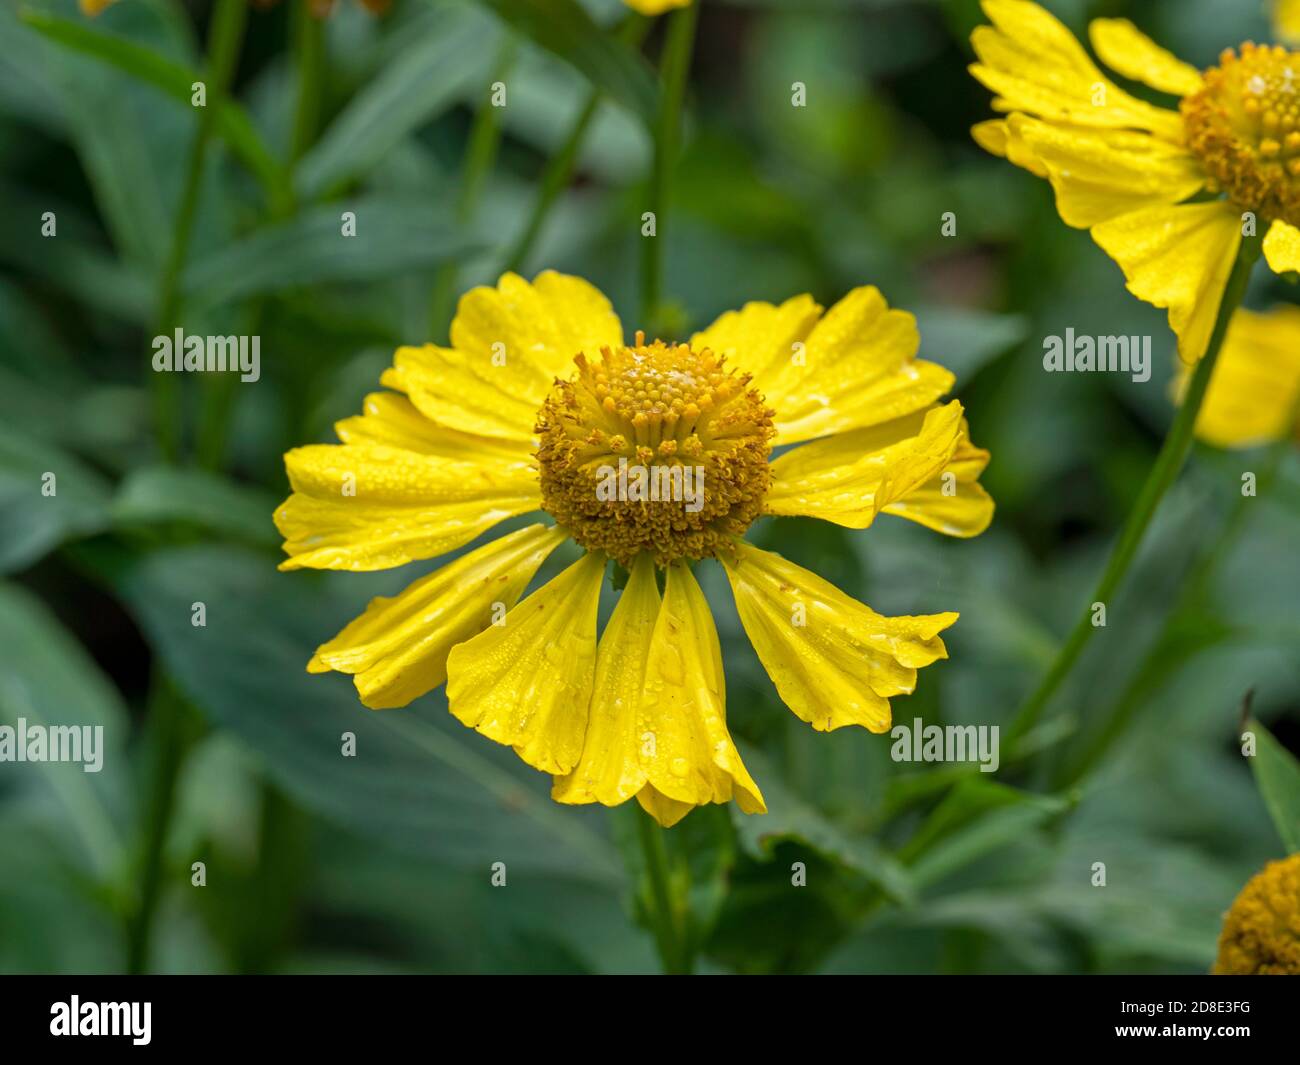 Closeup of a bright yellow Helenium sneezeweed flower, variety Kanaria, in a garden Stock Photo